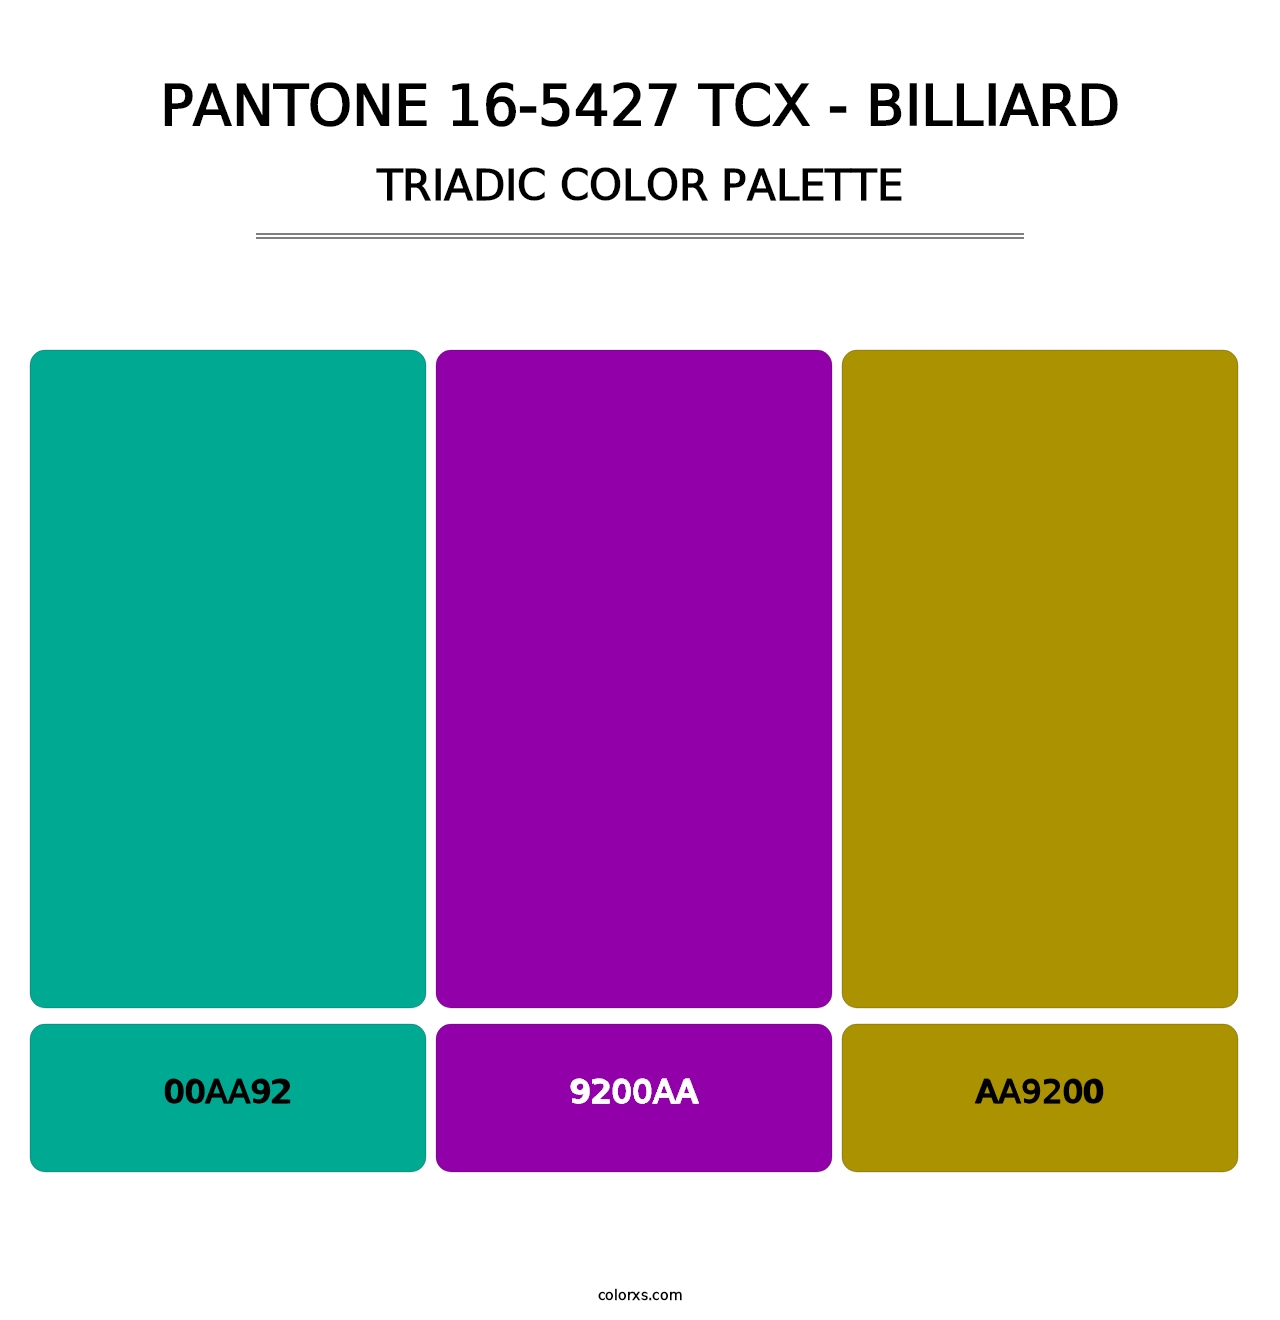 PANTONE 16-5427 TCX - Billiard - Triadic Color Palette